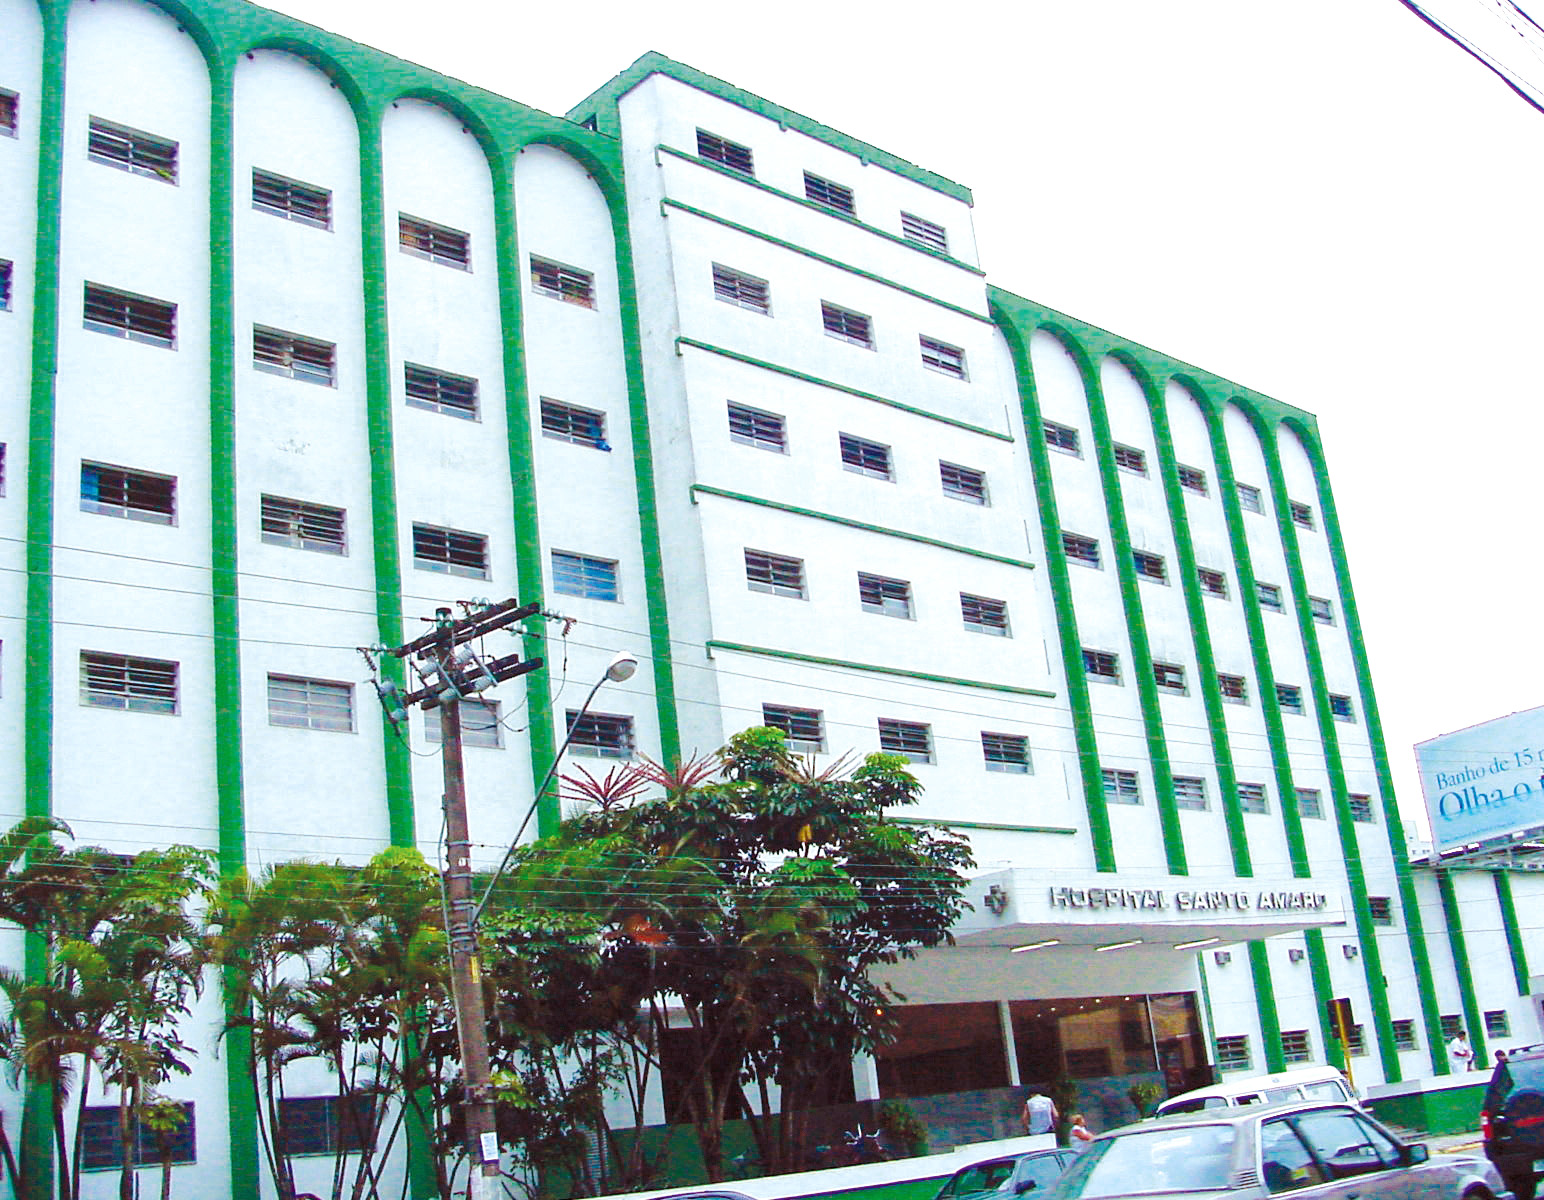 Hospital Santo Amaro<a style='float:right;color:#ccc' href='https://www3.al.sp.gov.br/repositorio/noticia/03-2008/PAULO ALEX HOSPITAL.jpg' target=_blank><i class='bi bi-zoom-in'></i> Clique para ver a imagem </a>